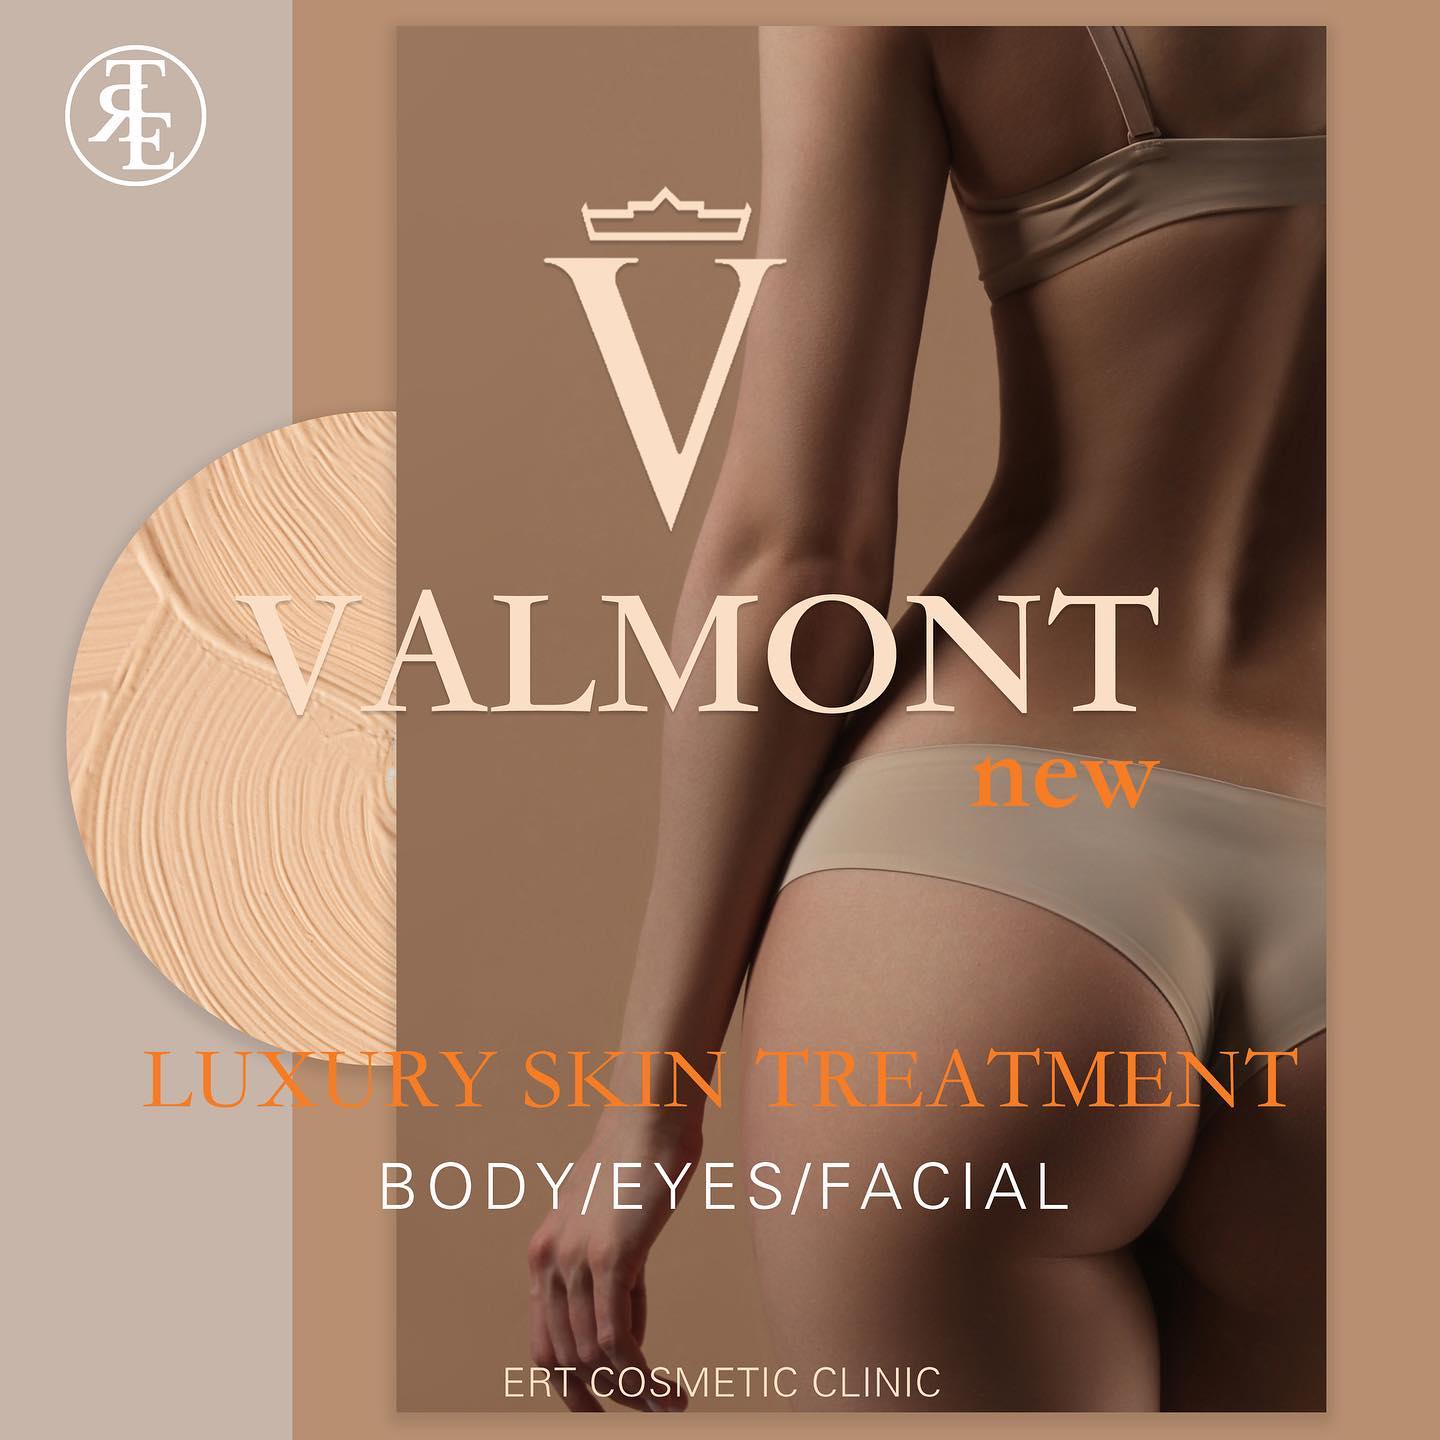 valmont_skincare_treatment